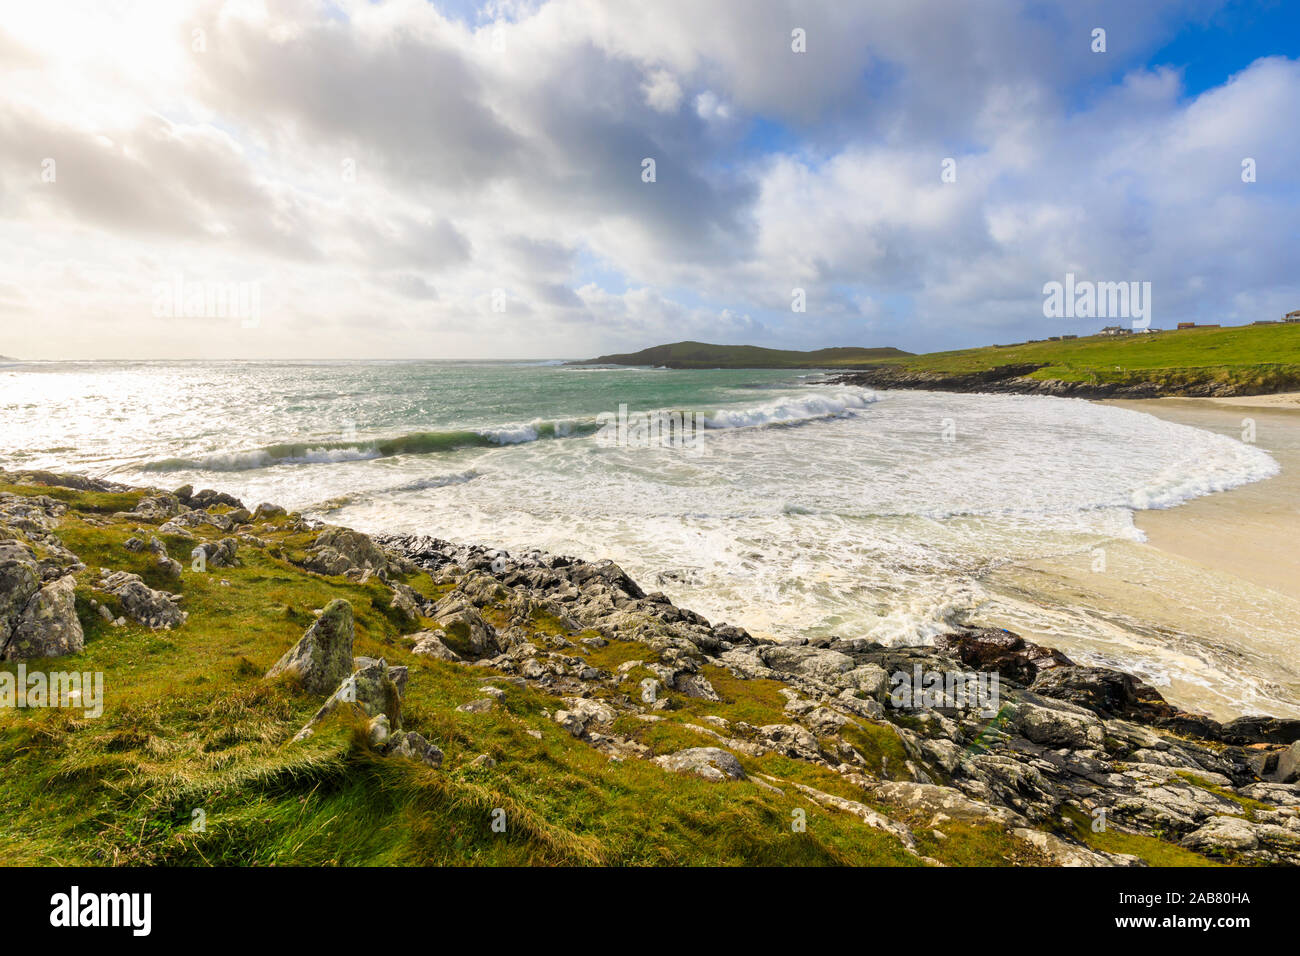 Meal Beach, breaking waves and big seas, stormy weather, Hamnavoe, West Burra Island, near Scalloway, Shetland Isles, Scotland, United Kingdom, Europe Stock Photo